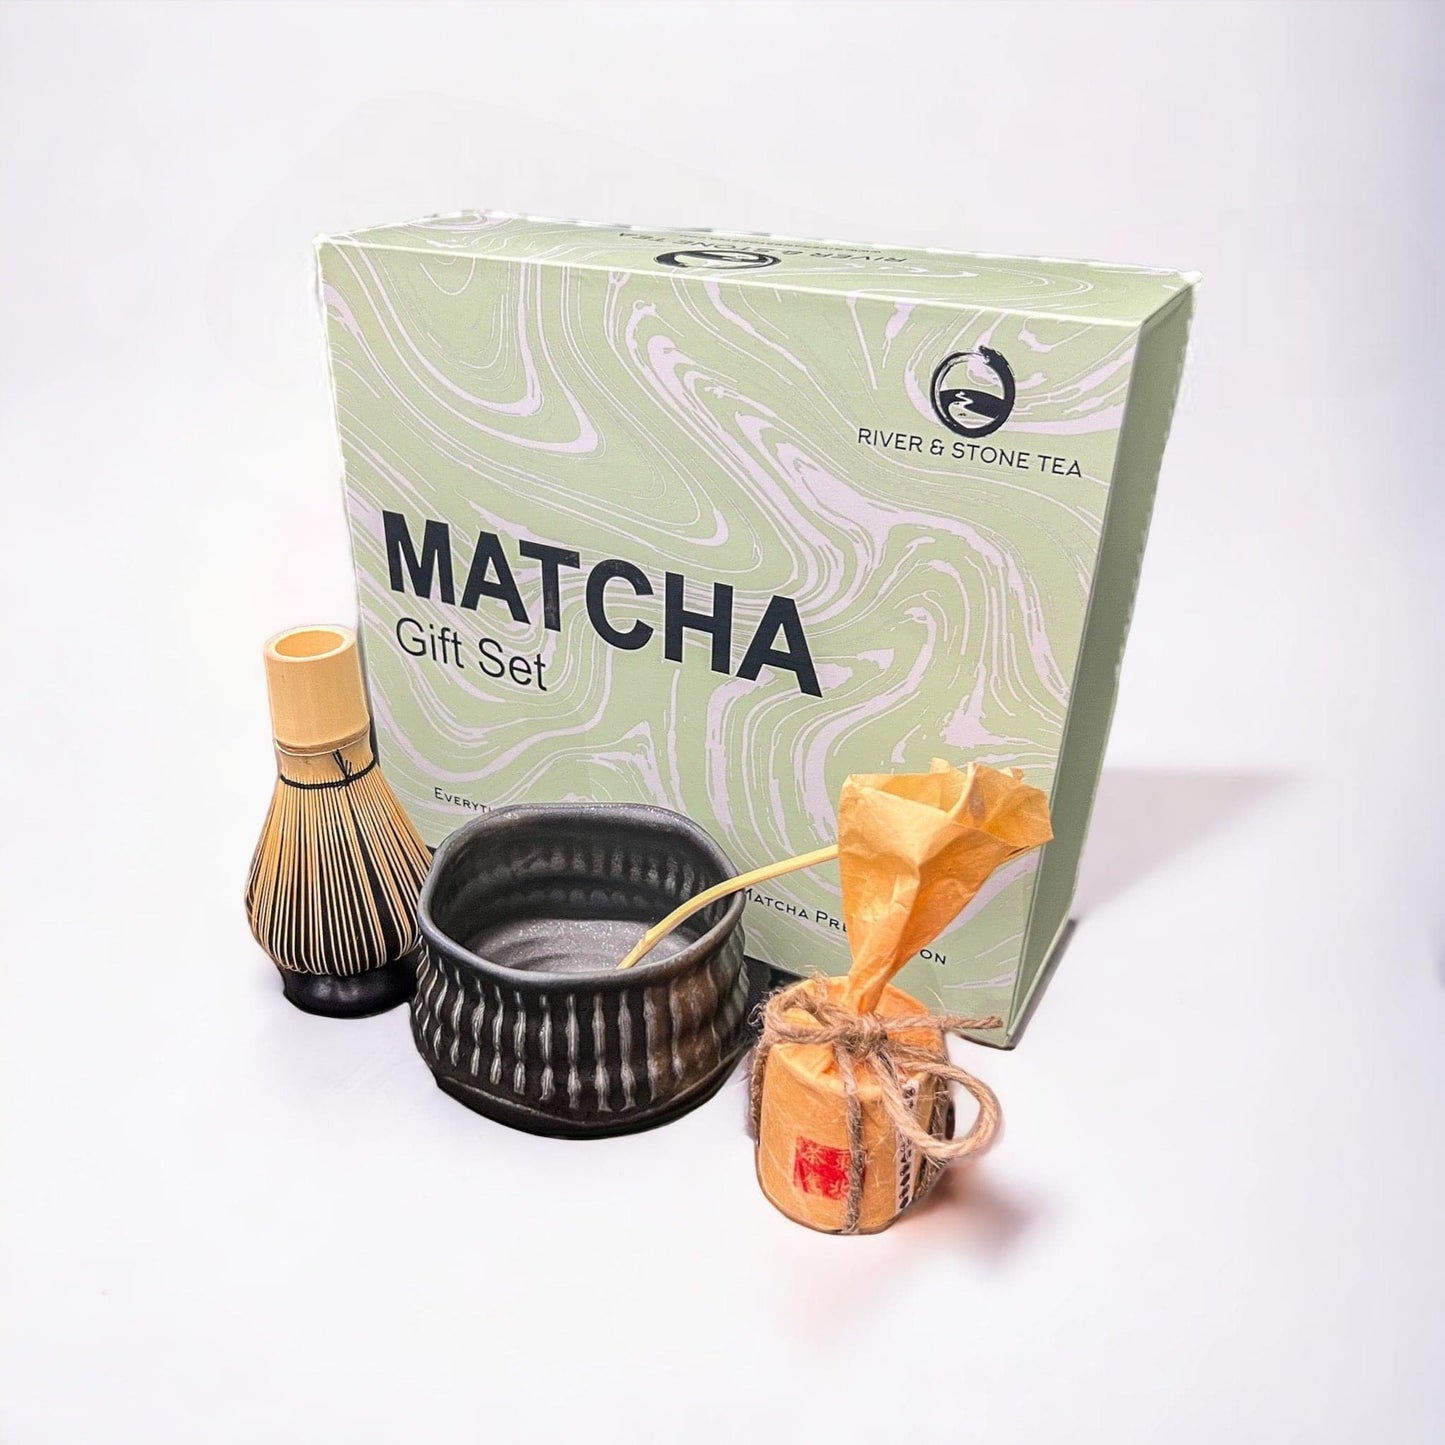 Matcha Lover Gift Set - Matcha Included - River & Stone Tea